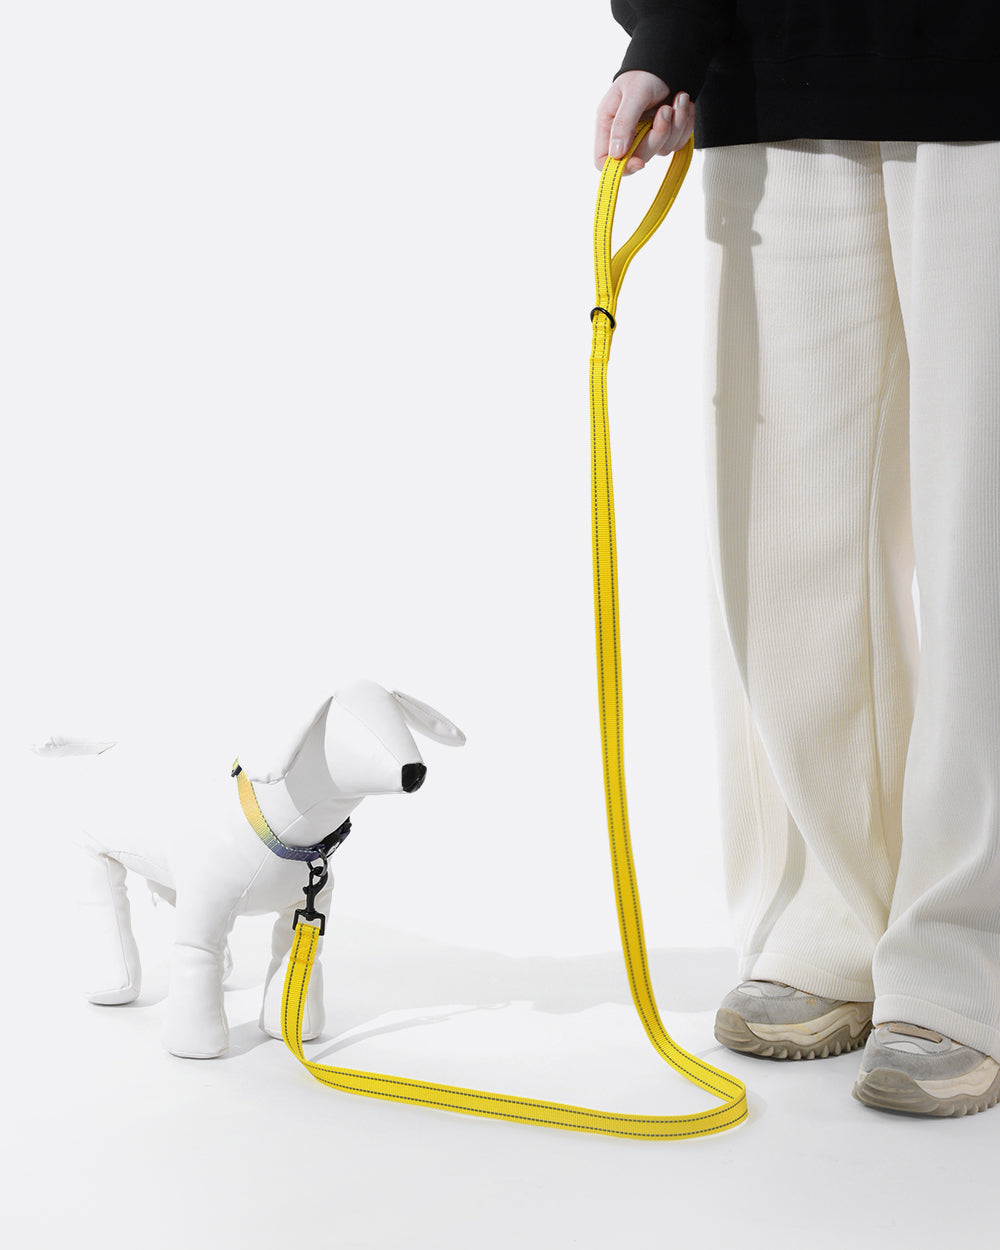 Simply Soft Reflective Dog Leash - Lemon Yellow